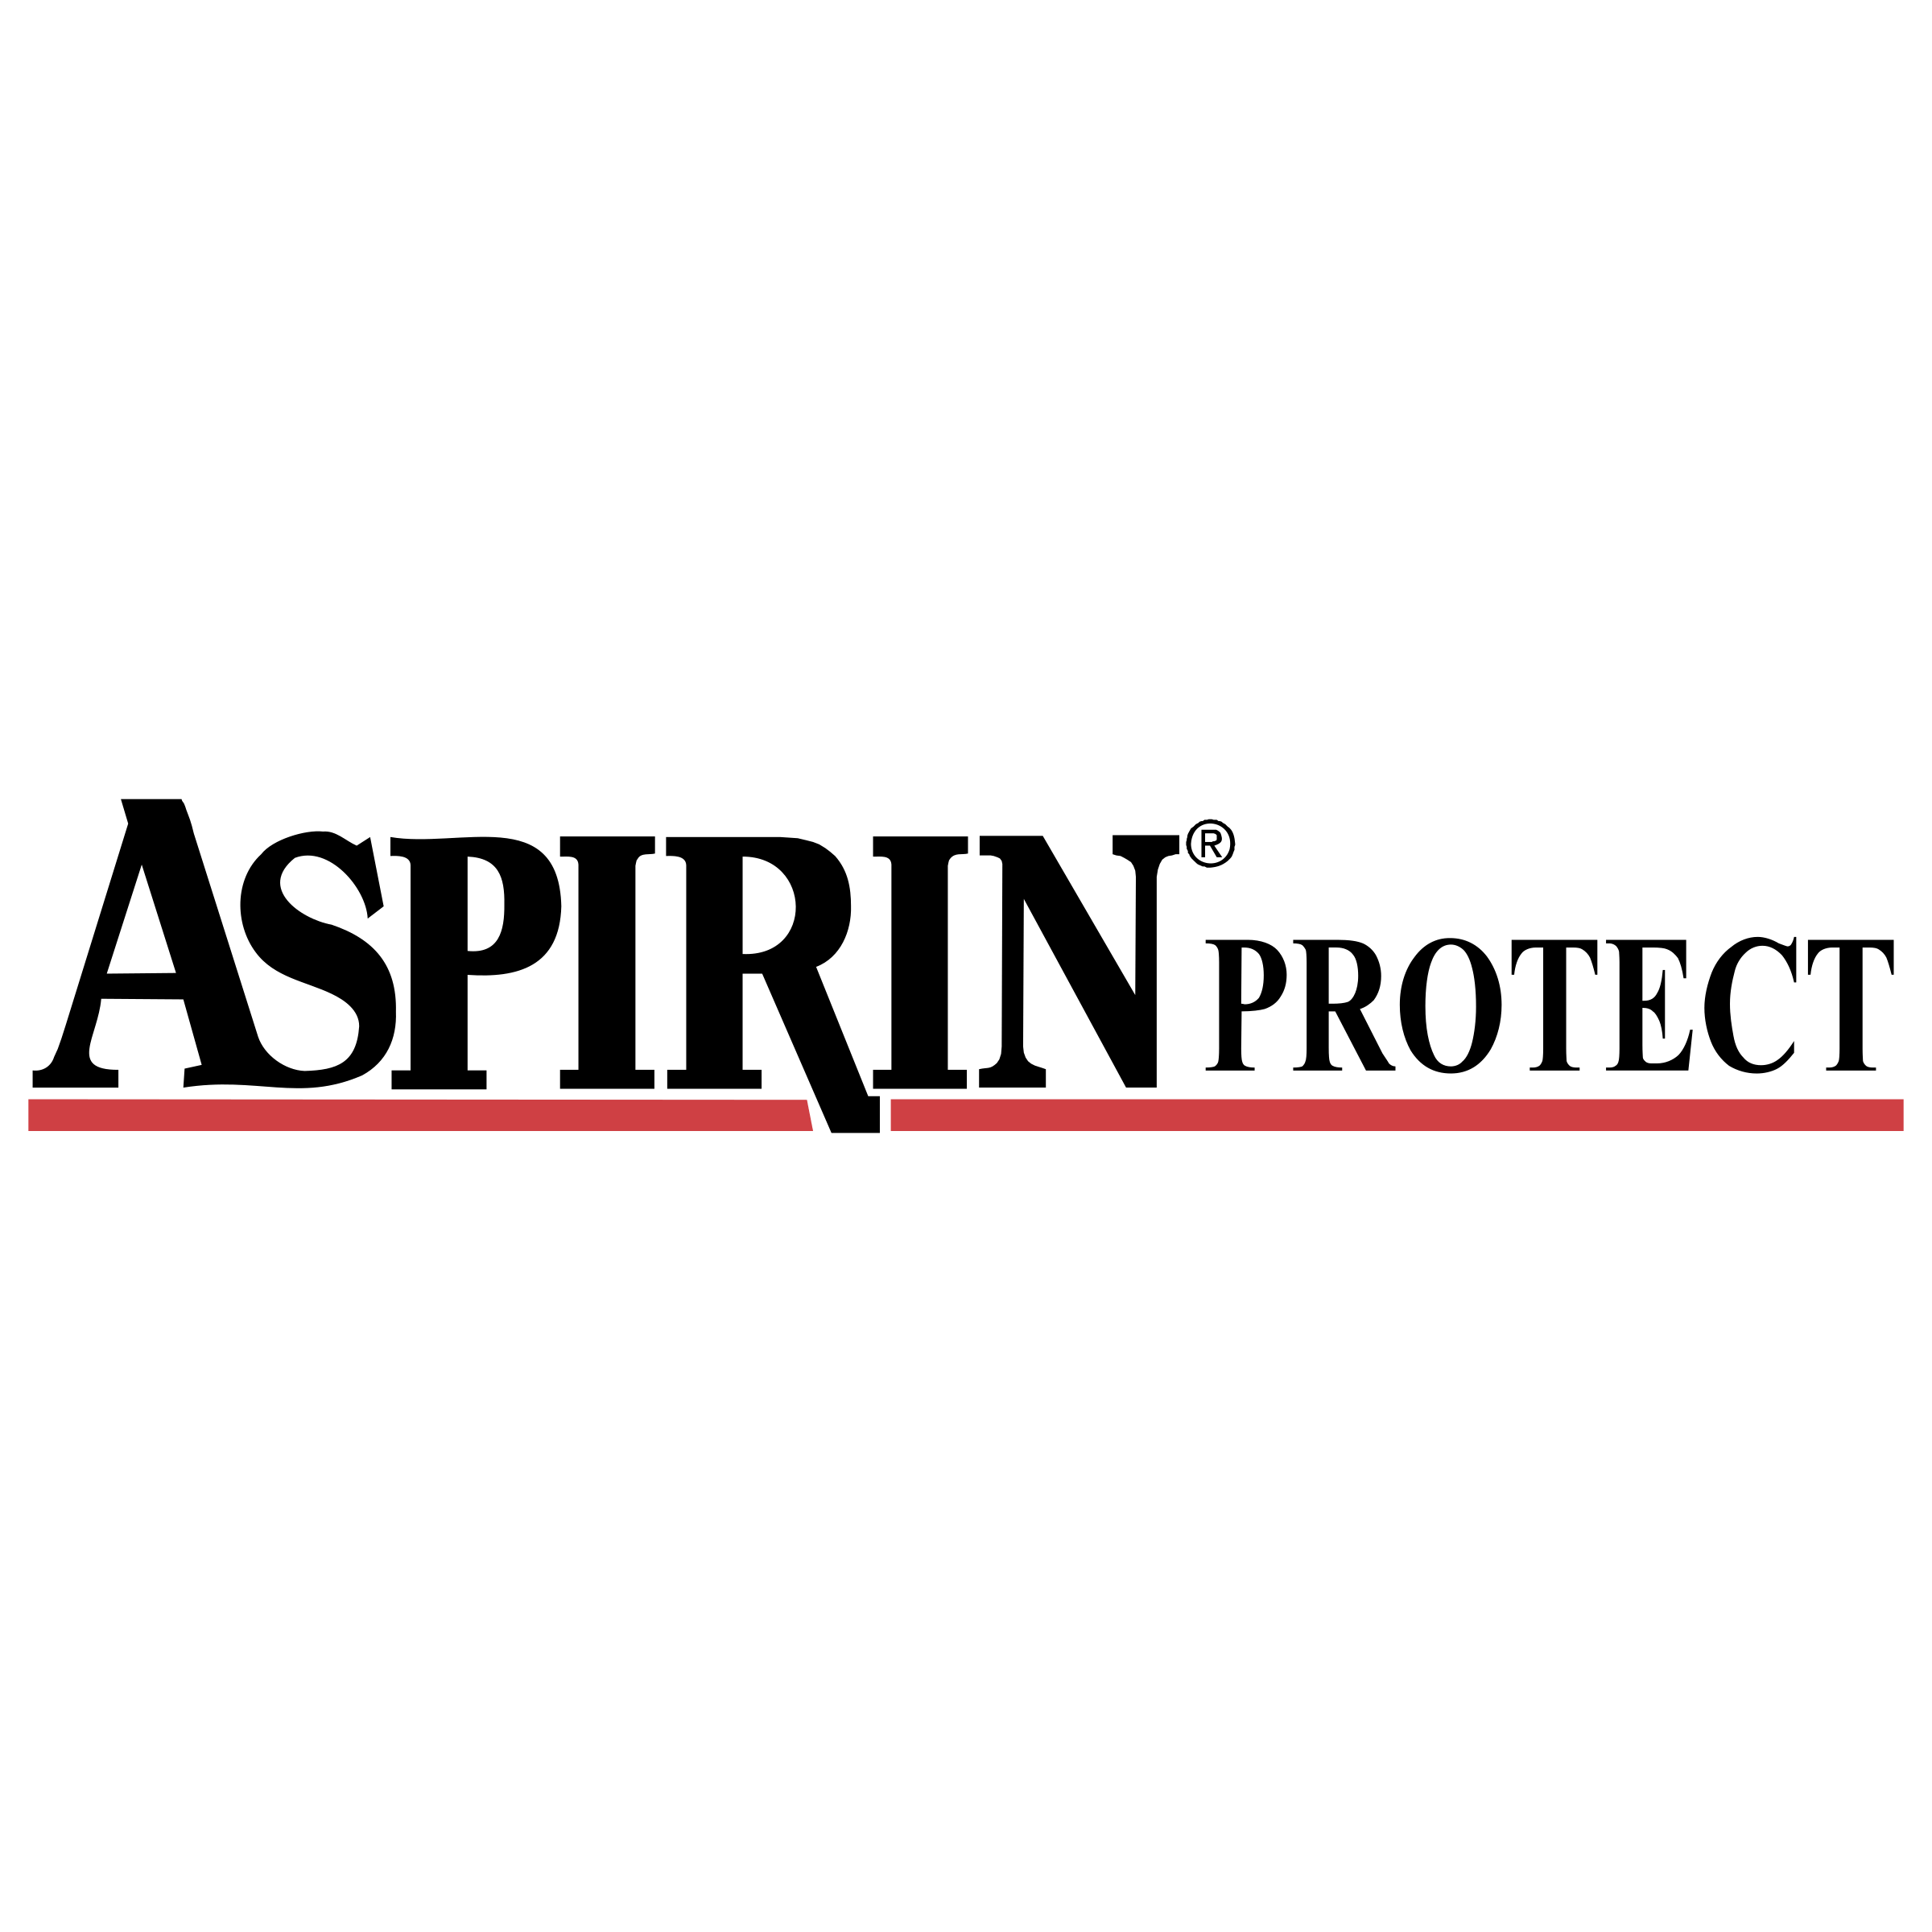 Aspirin Logo - Aspirin Protect 01 Logo PNG Transparent & SVG Vector - Freebie Supply